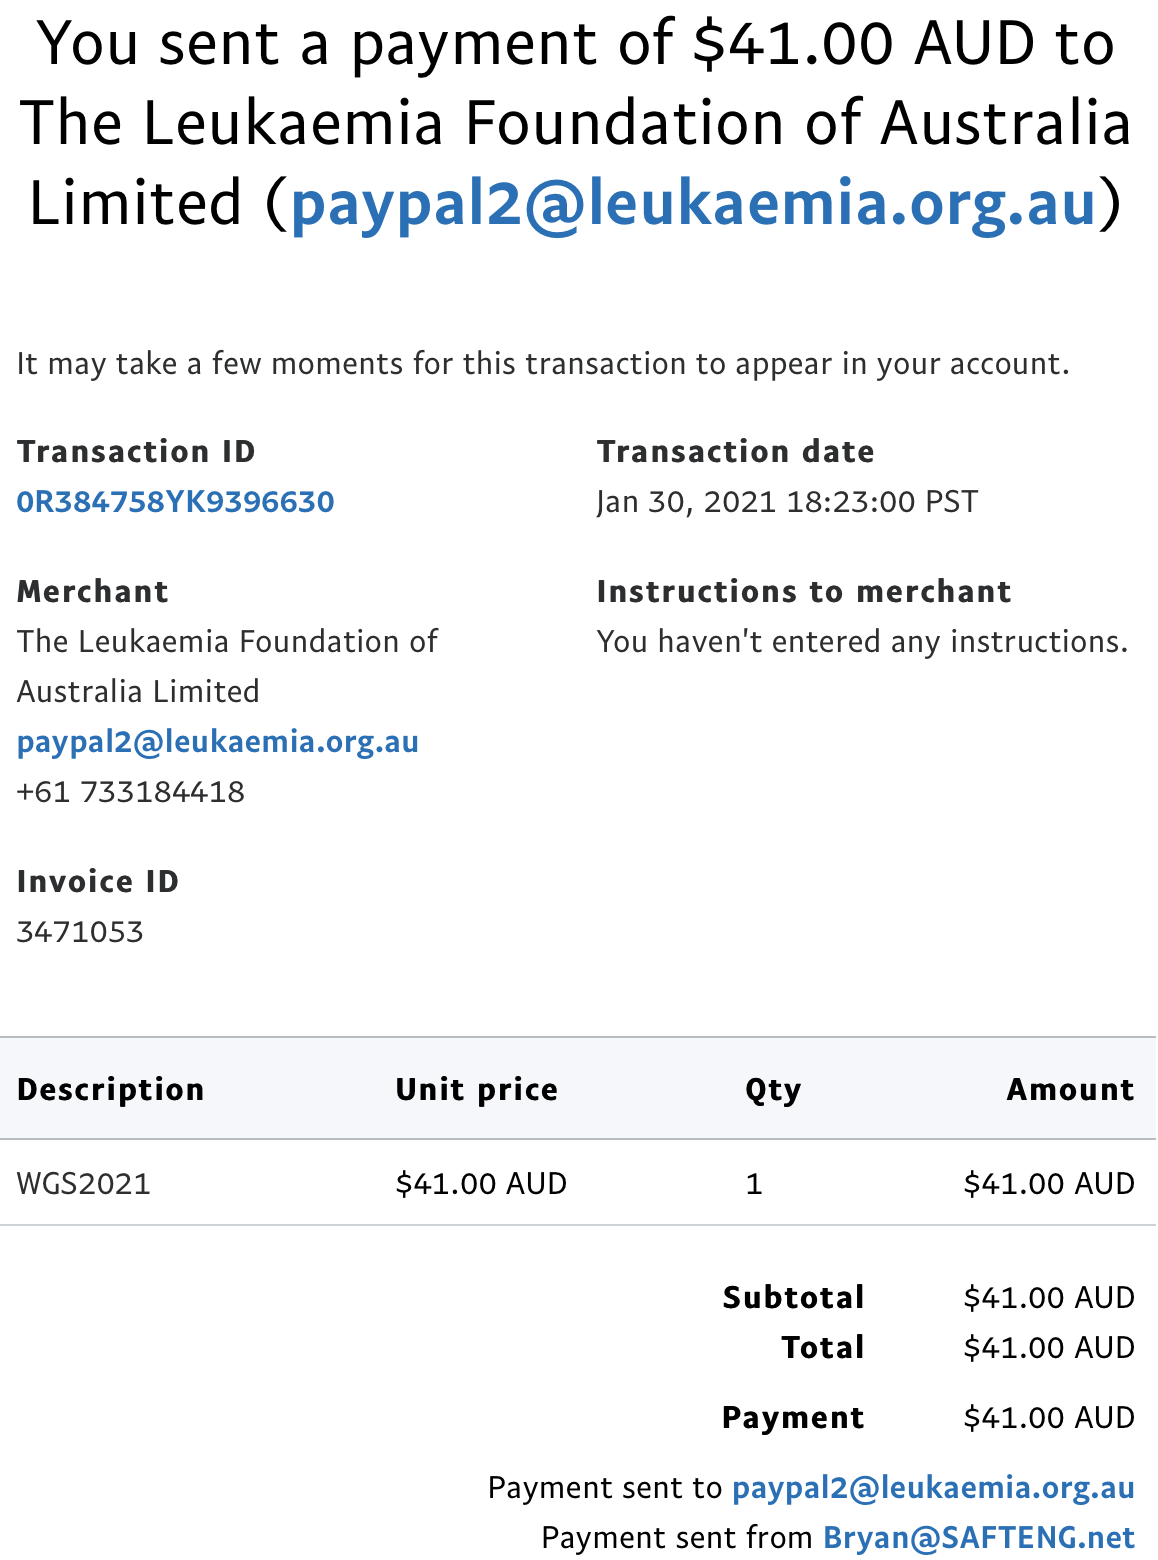 The Leukaemia Foundation of Australia Limited 2021 Donation